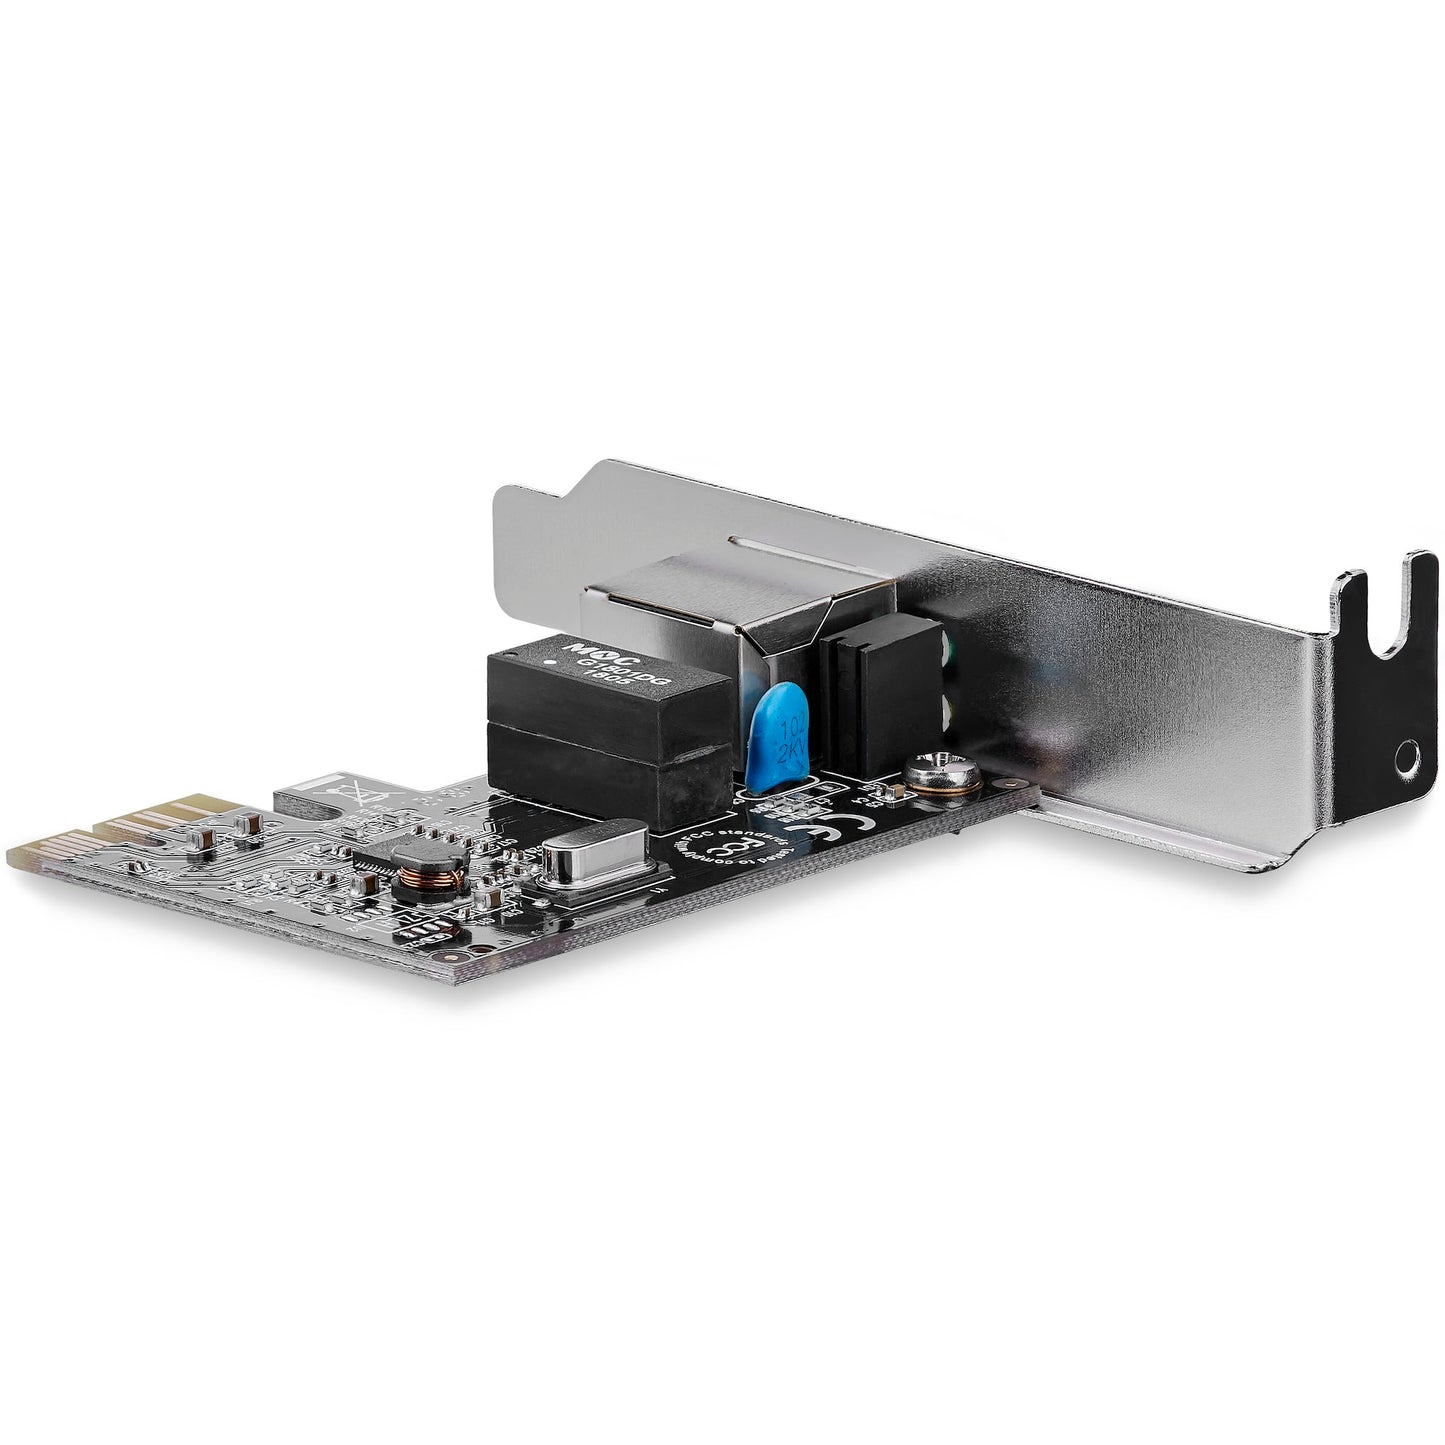 Tarjeta de red PCI express de STARTECH 1 Puerto Gigabit Ethernet RJ45 - Adaptador NIC PCI-e - Perfil Bajo